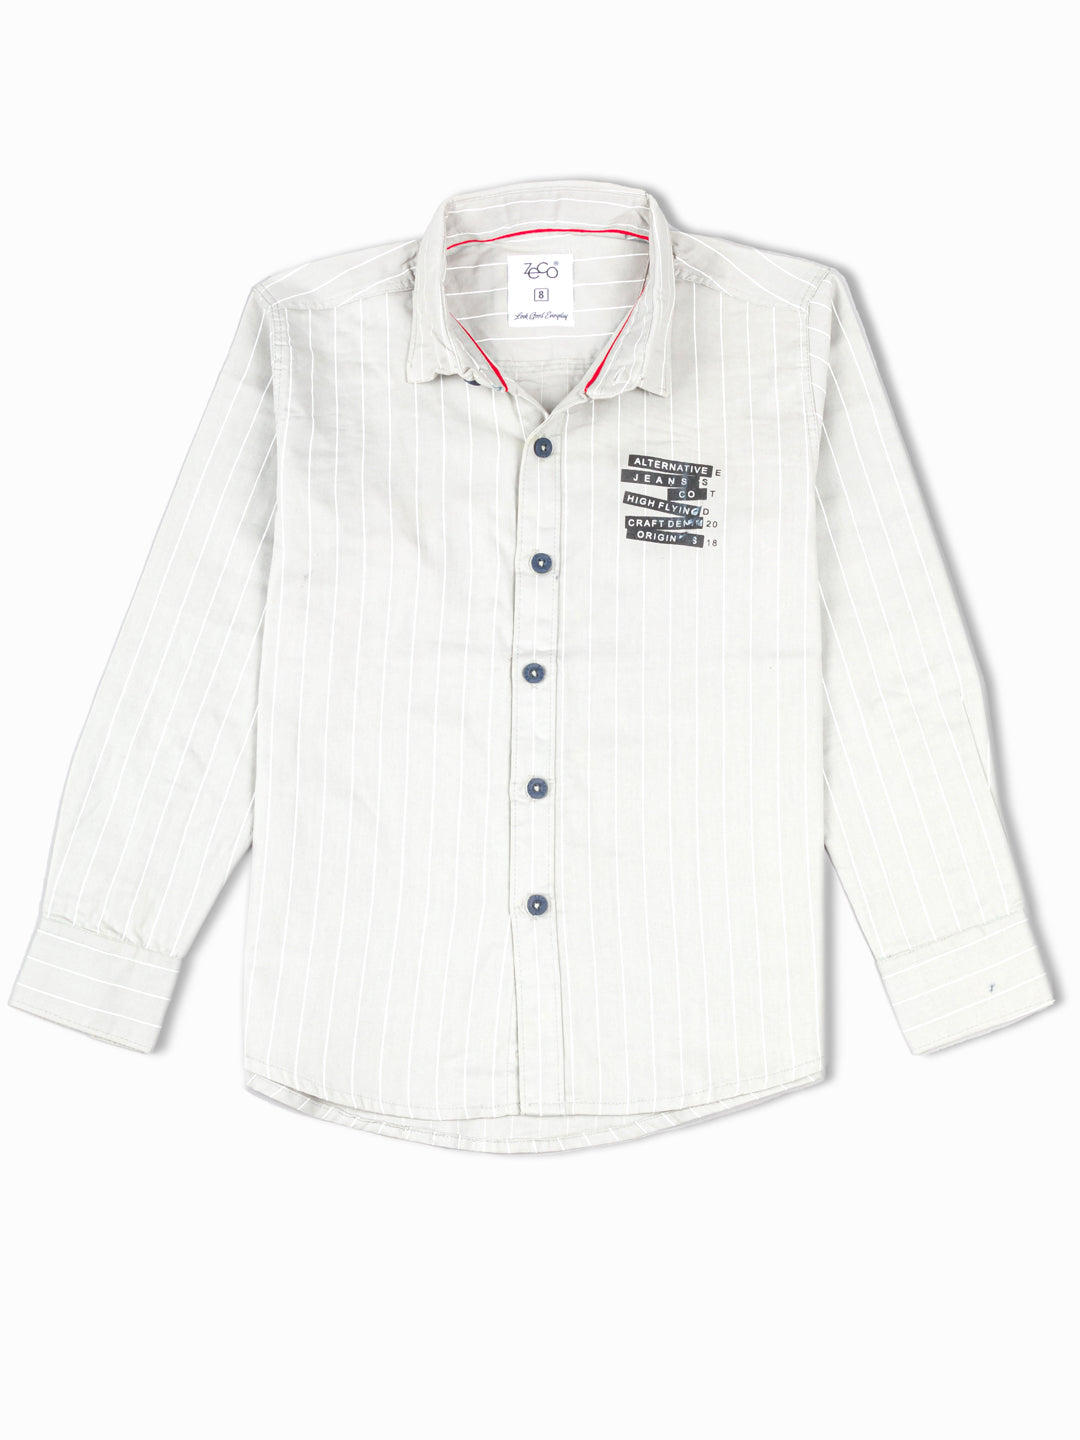 Kid's Harbor Gray Pin Stripes Shirt